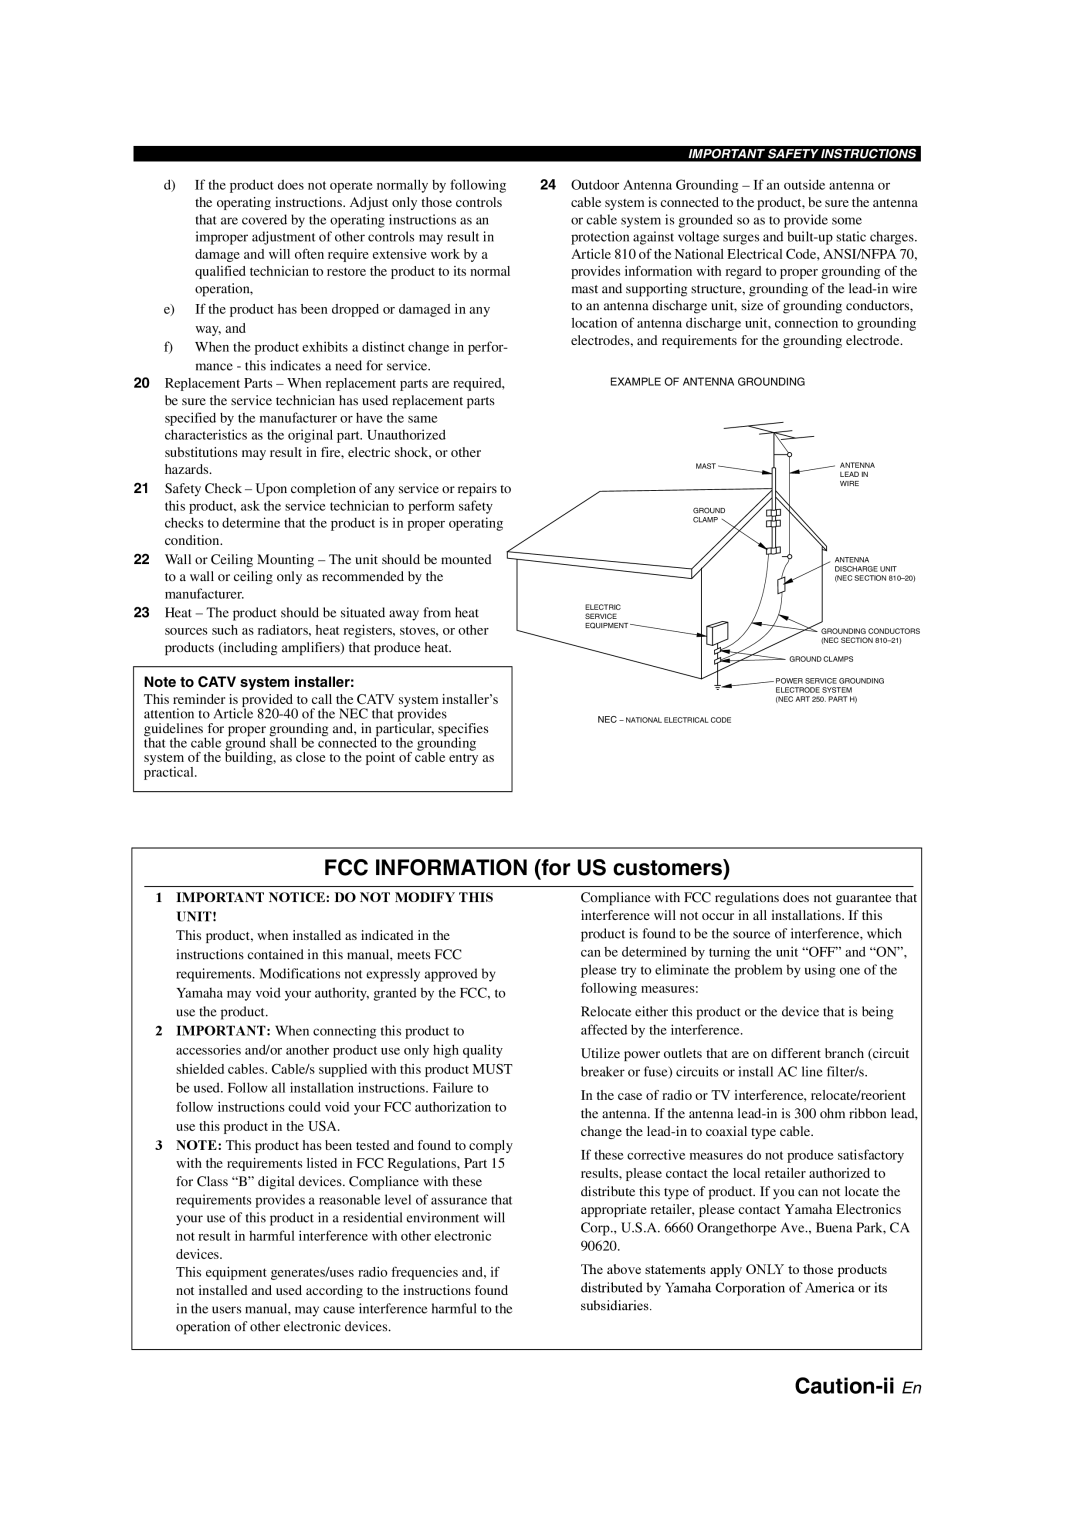 Yamaha HTR-6150 owner manual FCC INFORMATION for US customers, Caution-ii En, Note to CATV system installer 